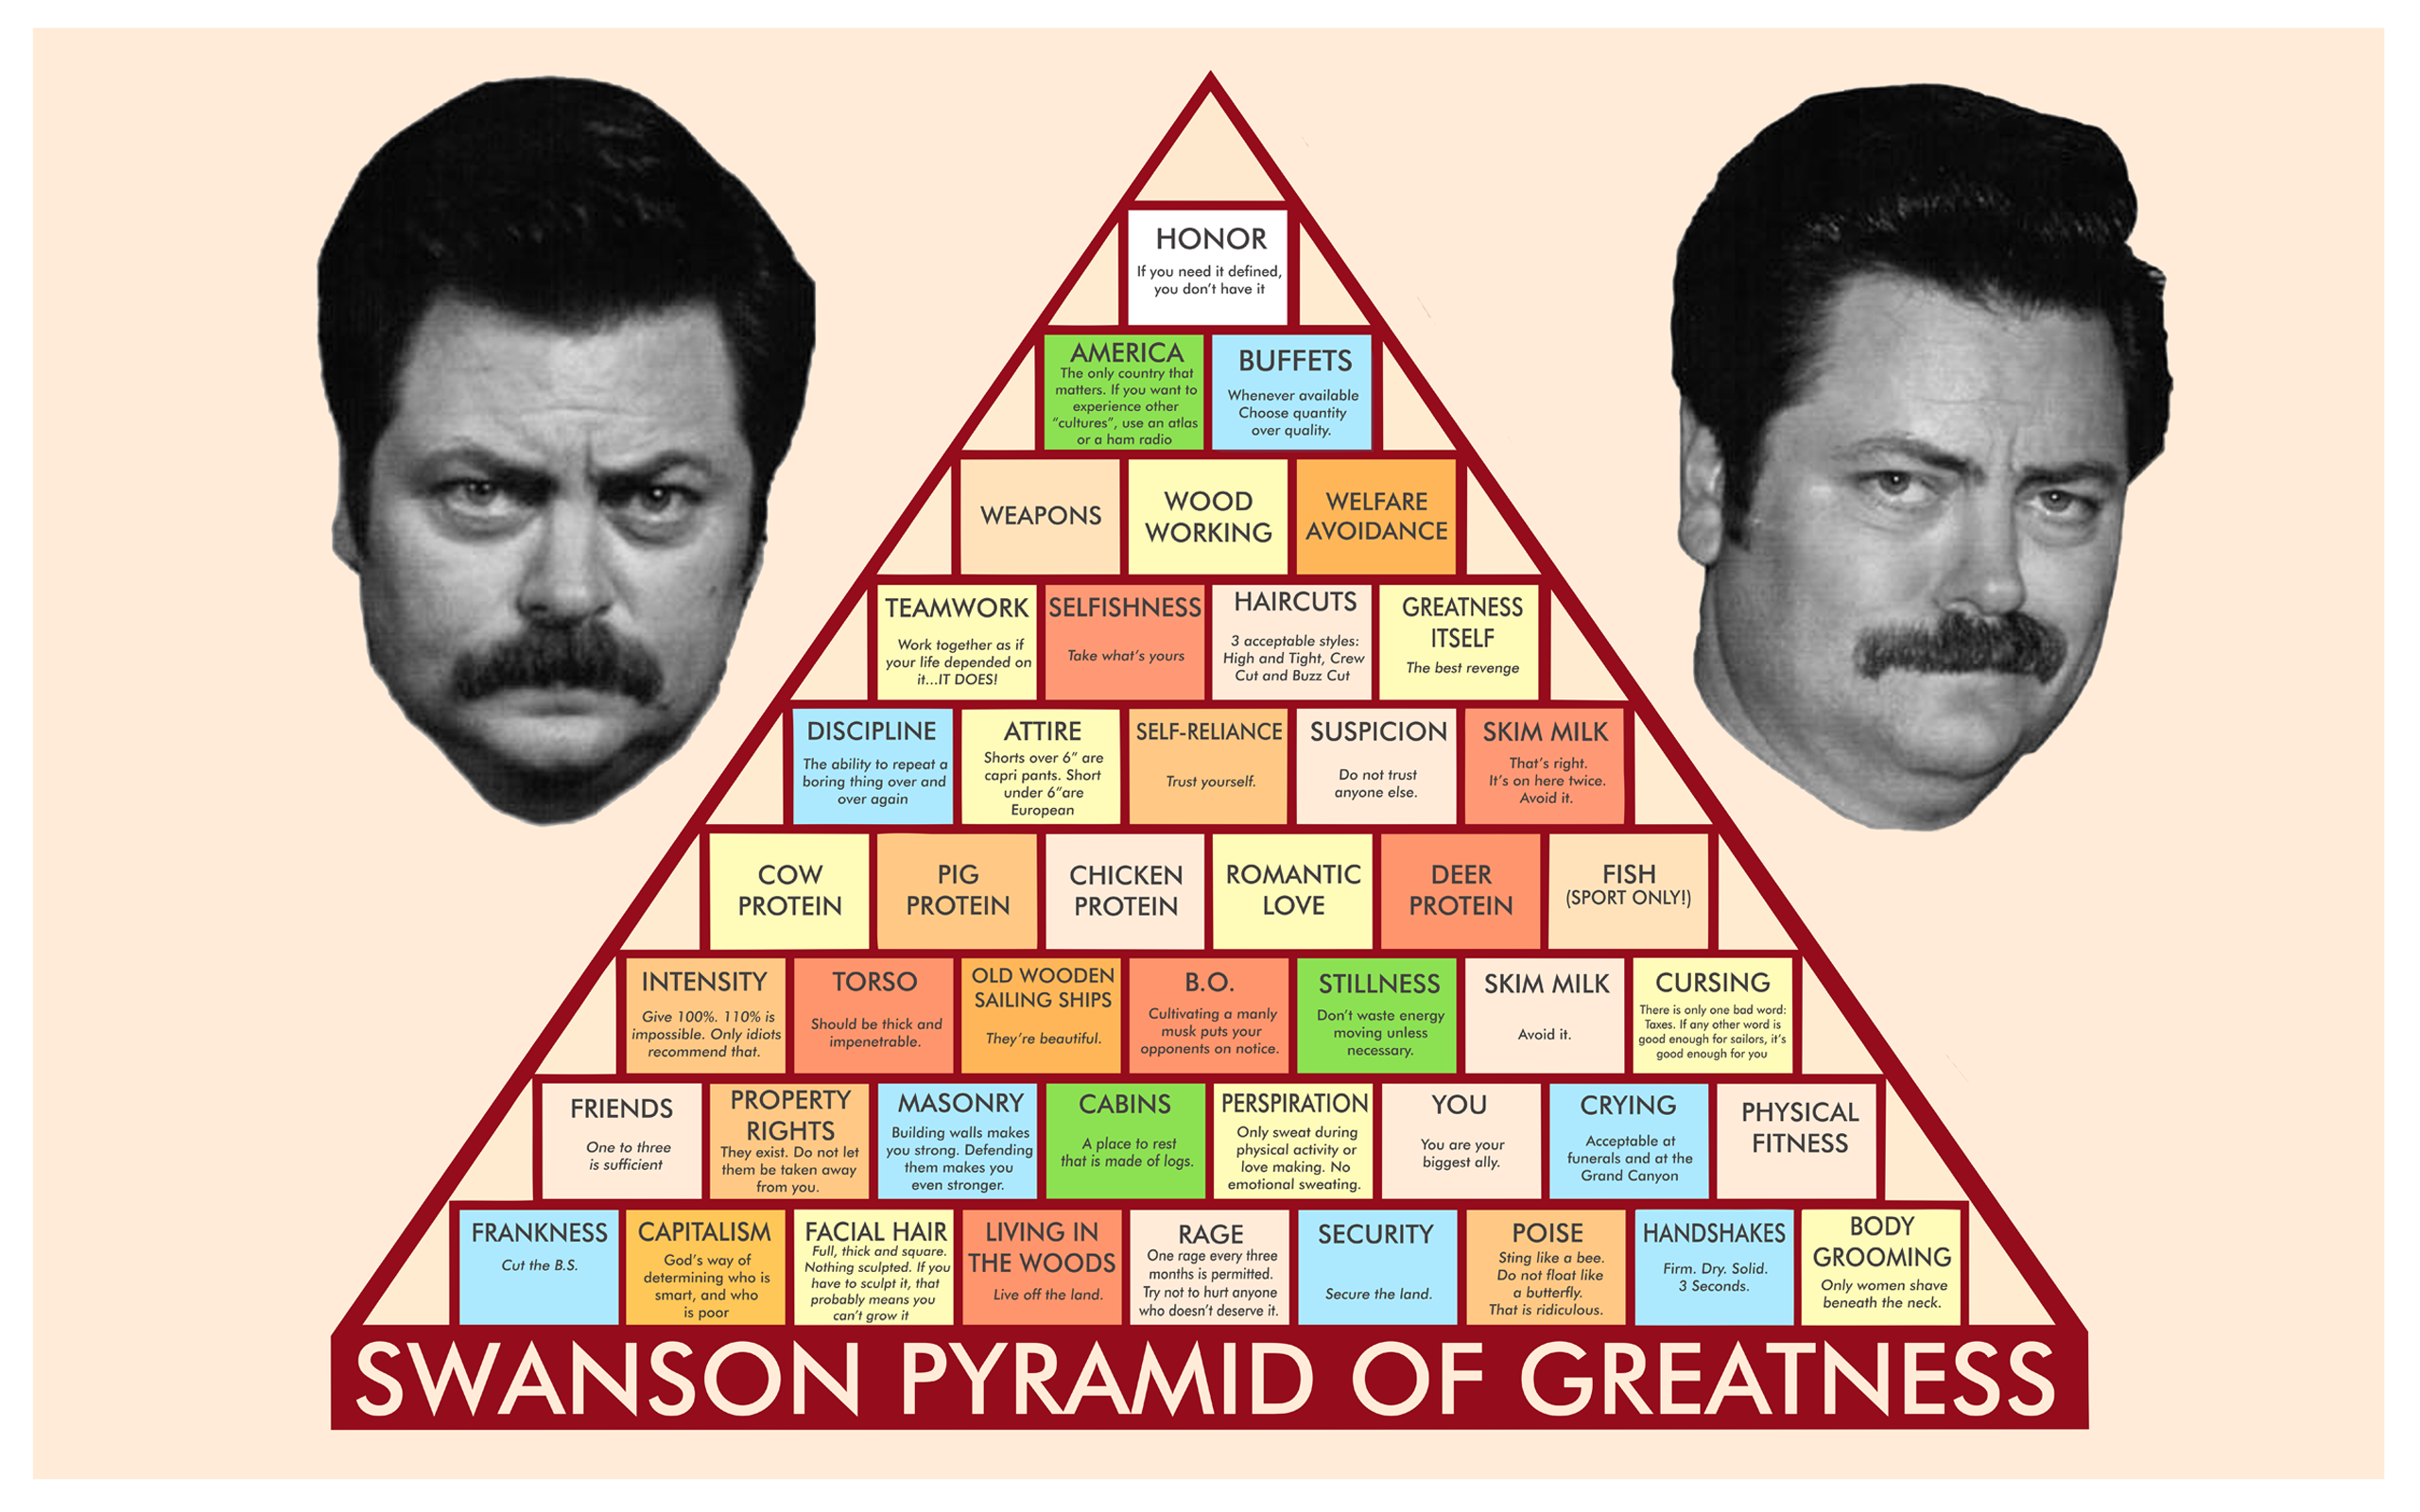 swanson-pyramid-of-greatness-nexus10-2560x1600.png